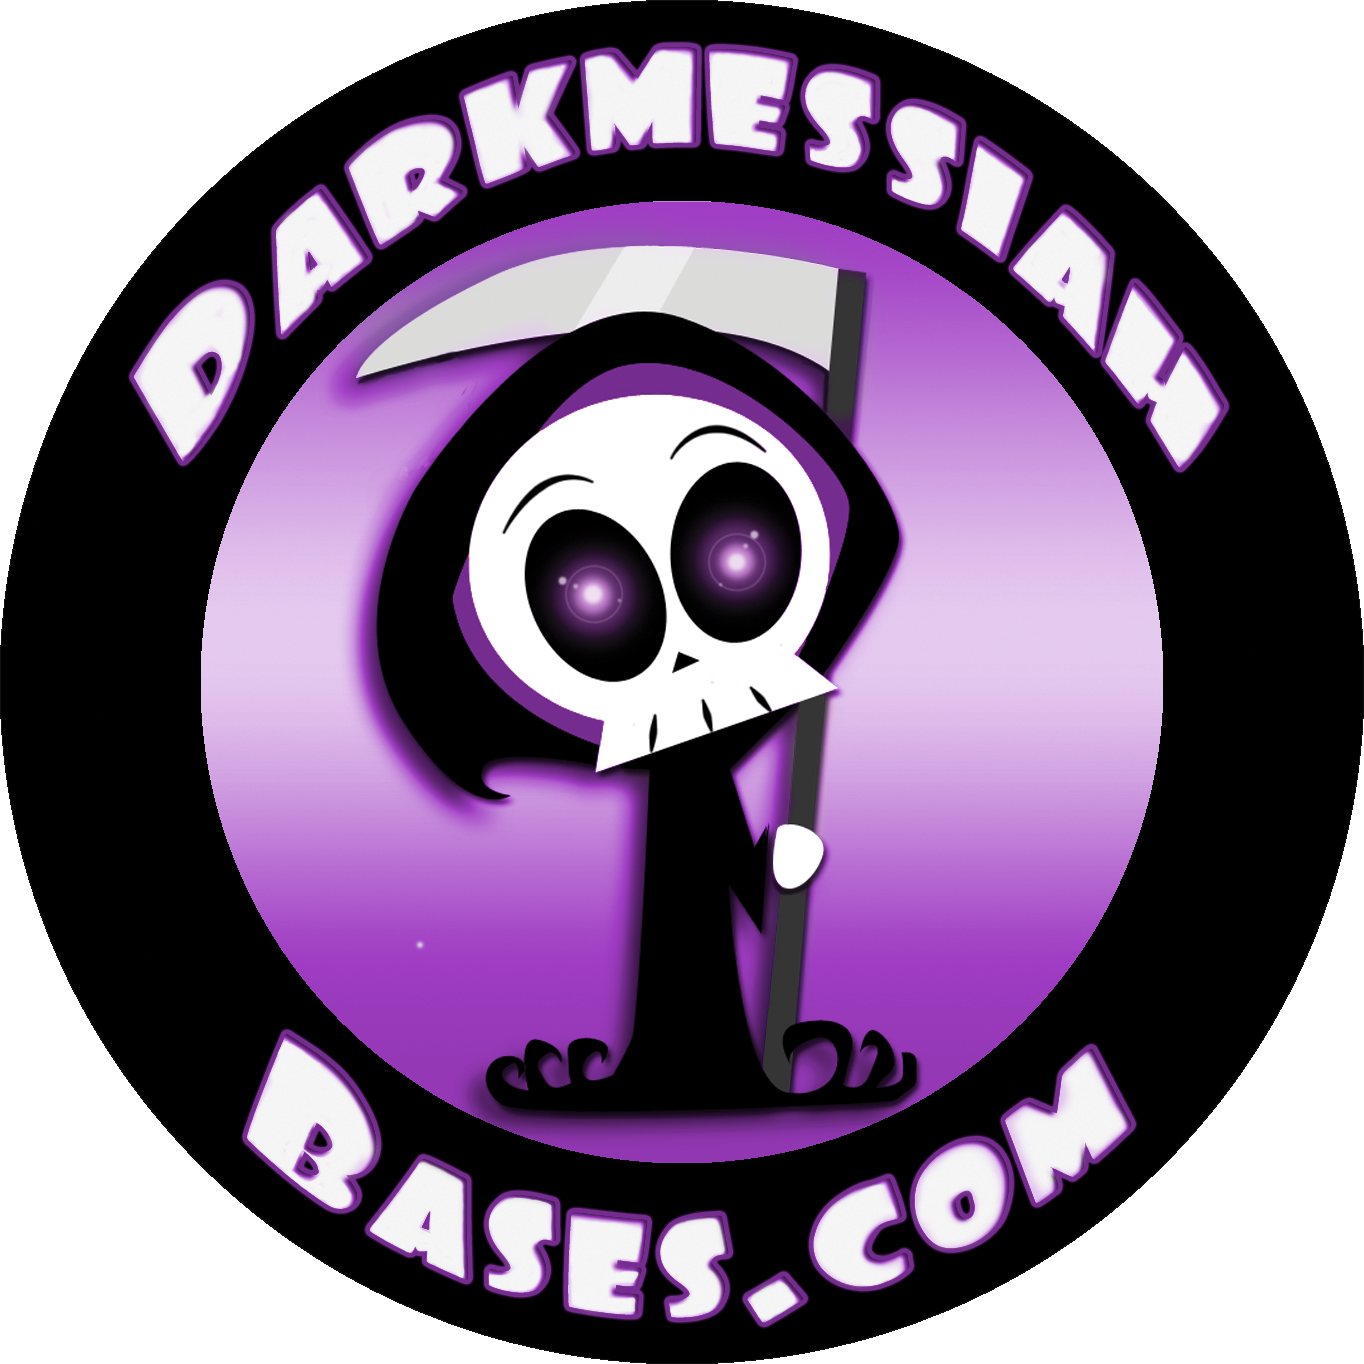 Darkmessiah Bases